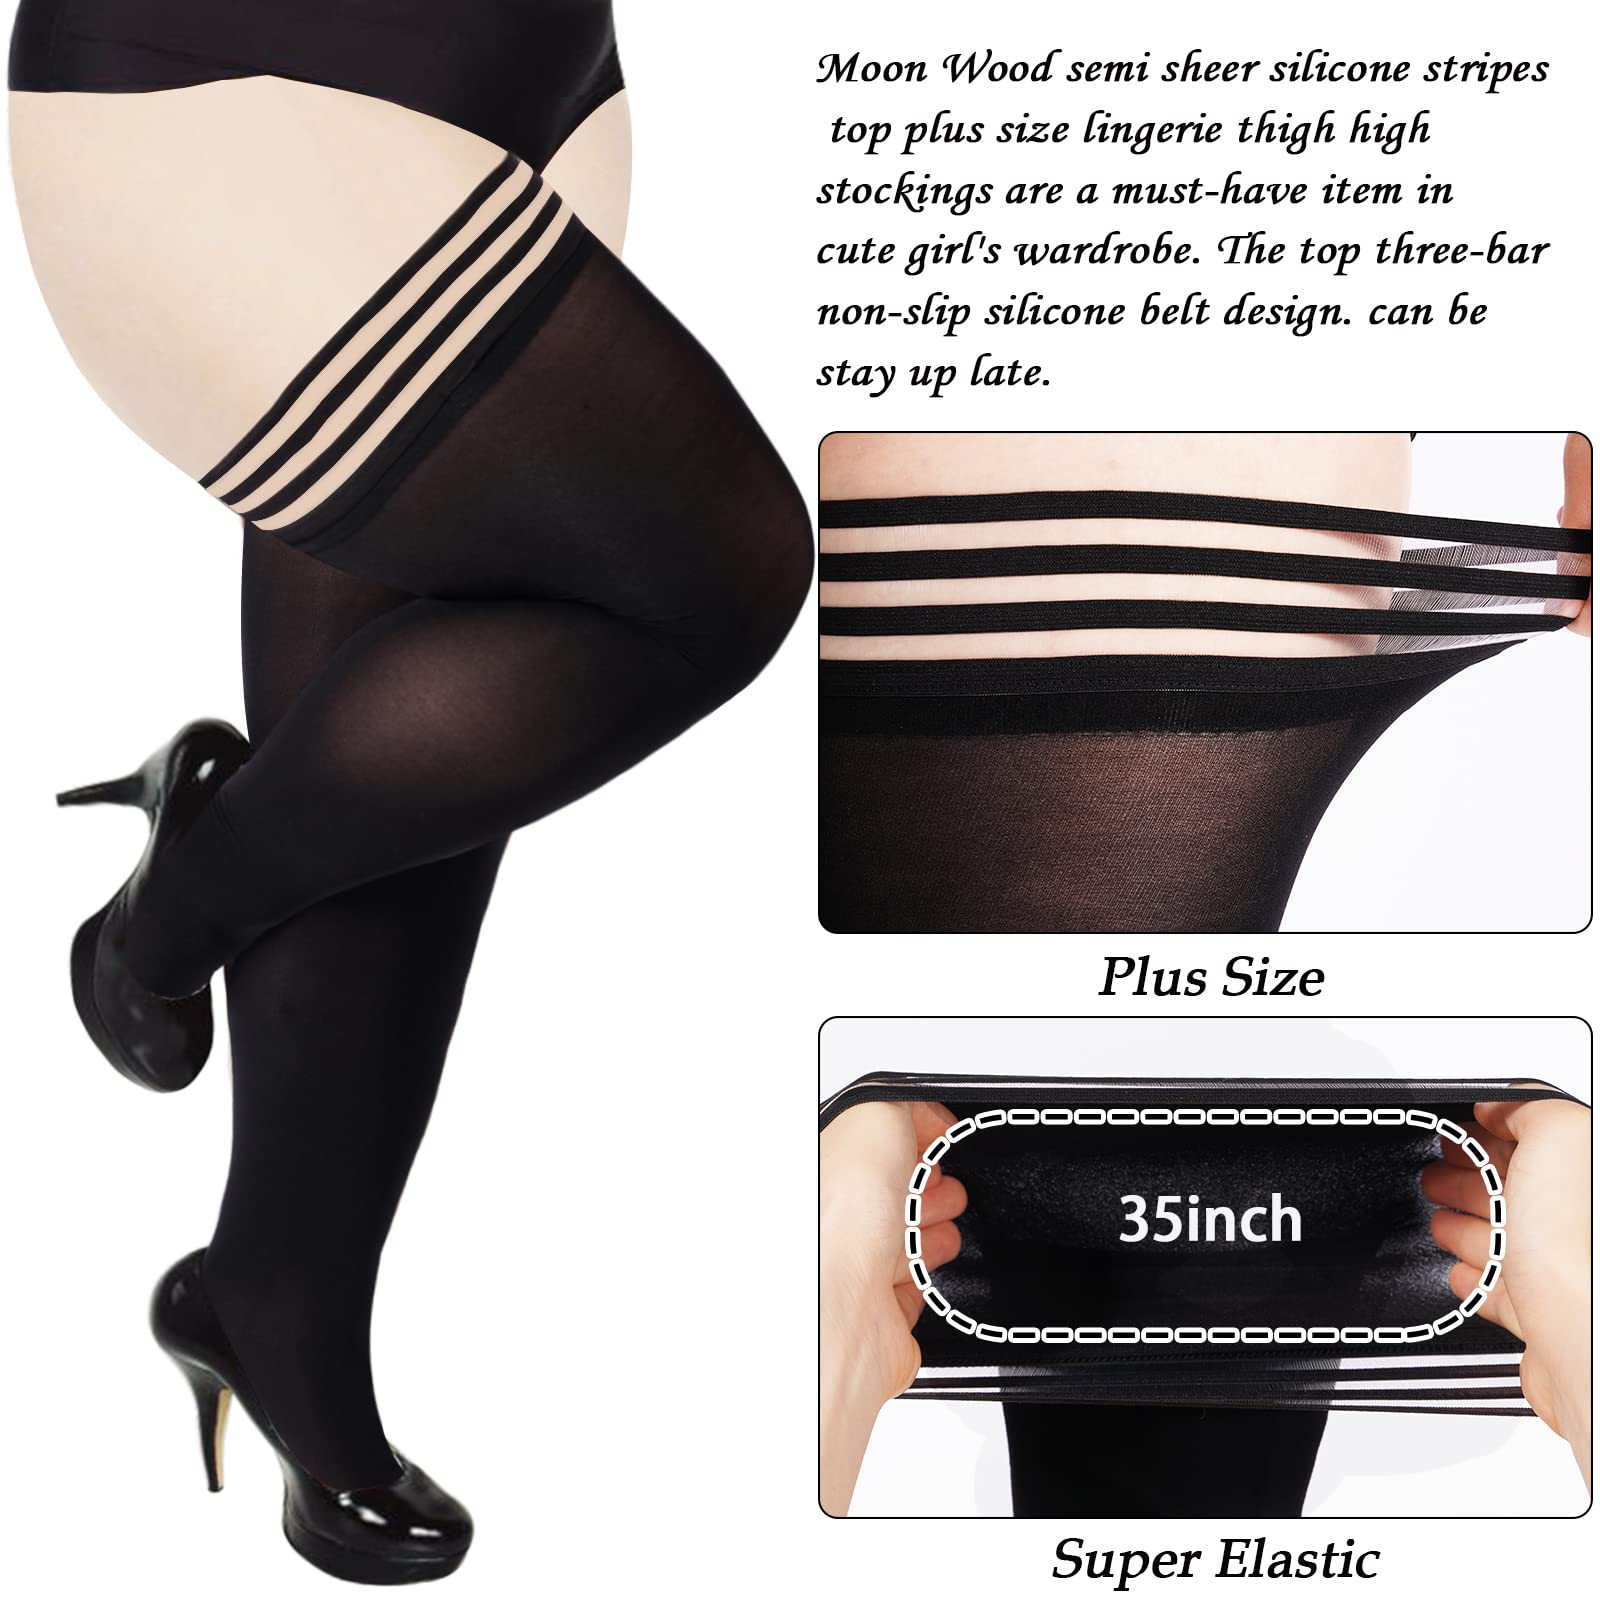 55D Semi Sheer Thigh Highs Stockings for Women - Black - Moon Wood